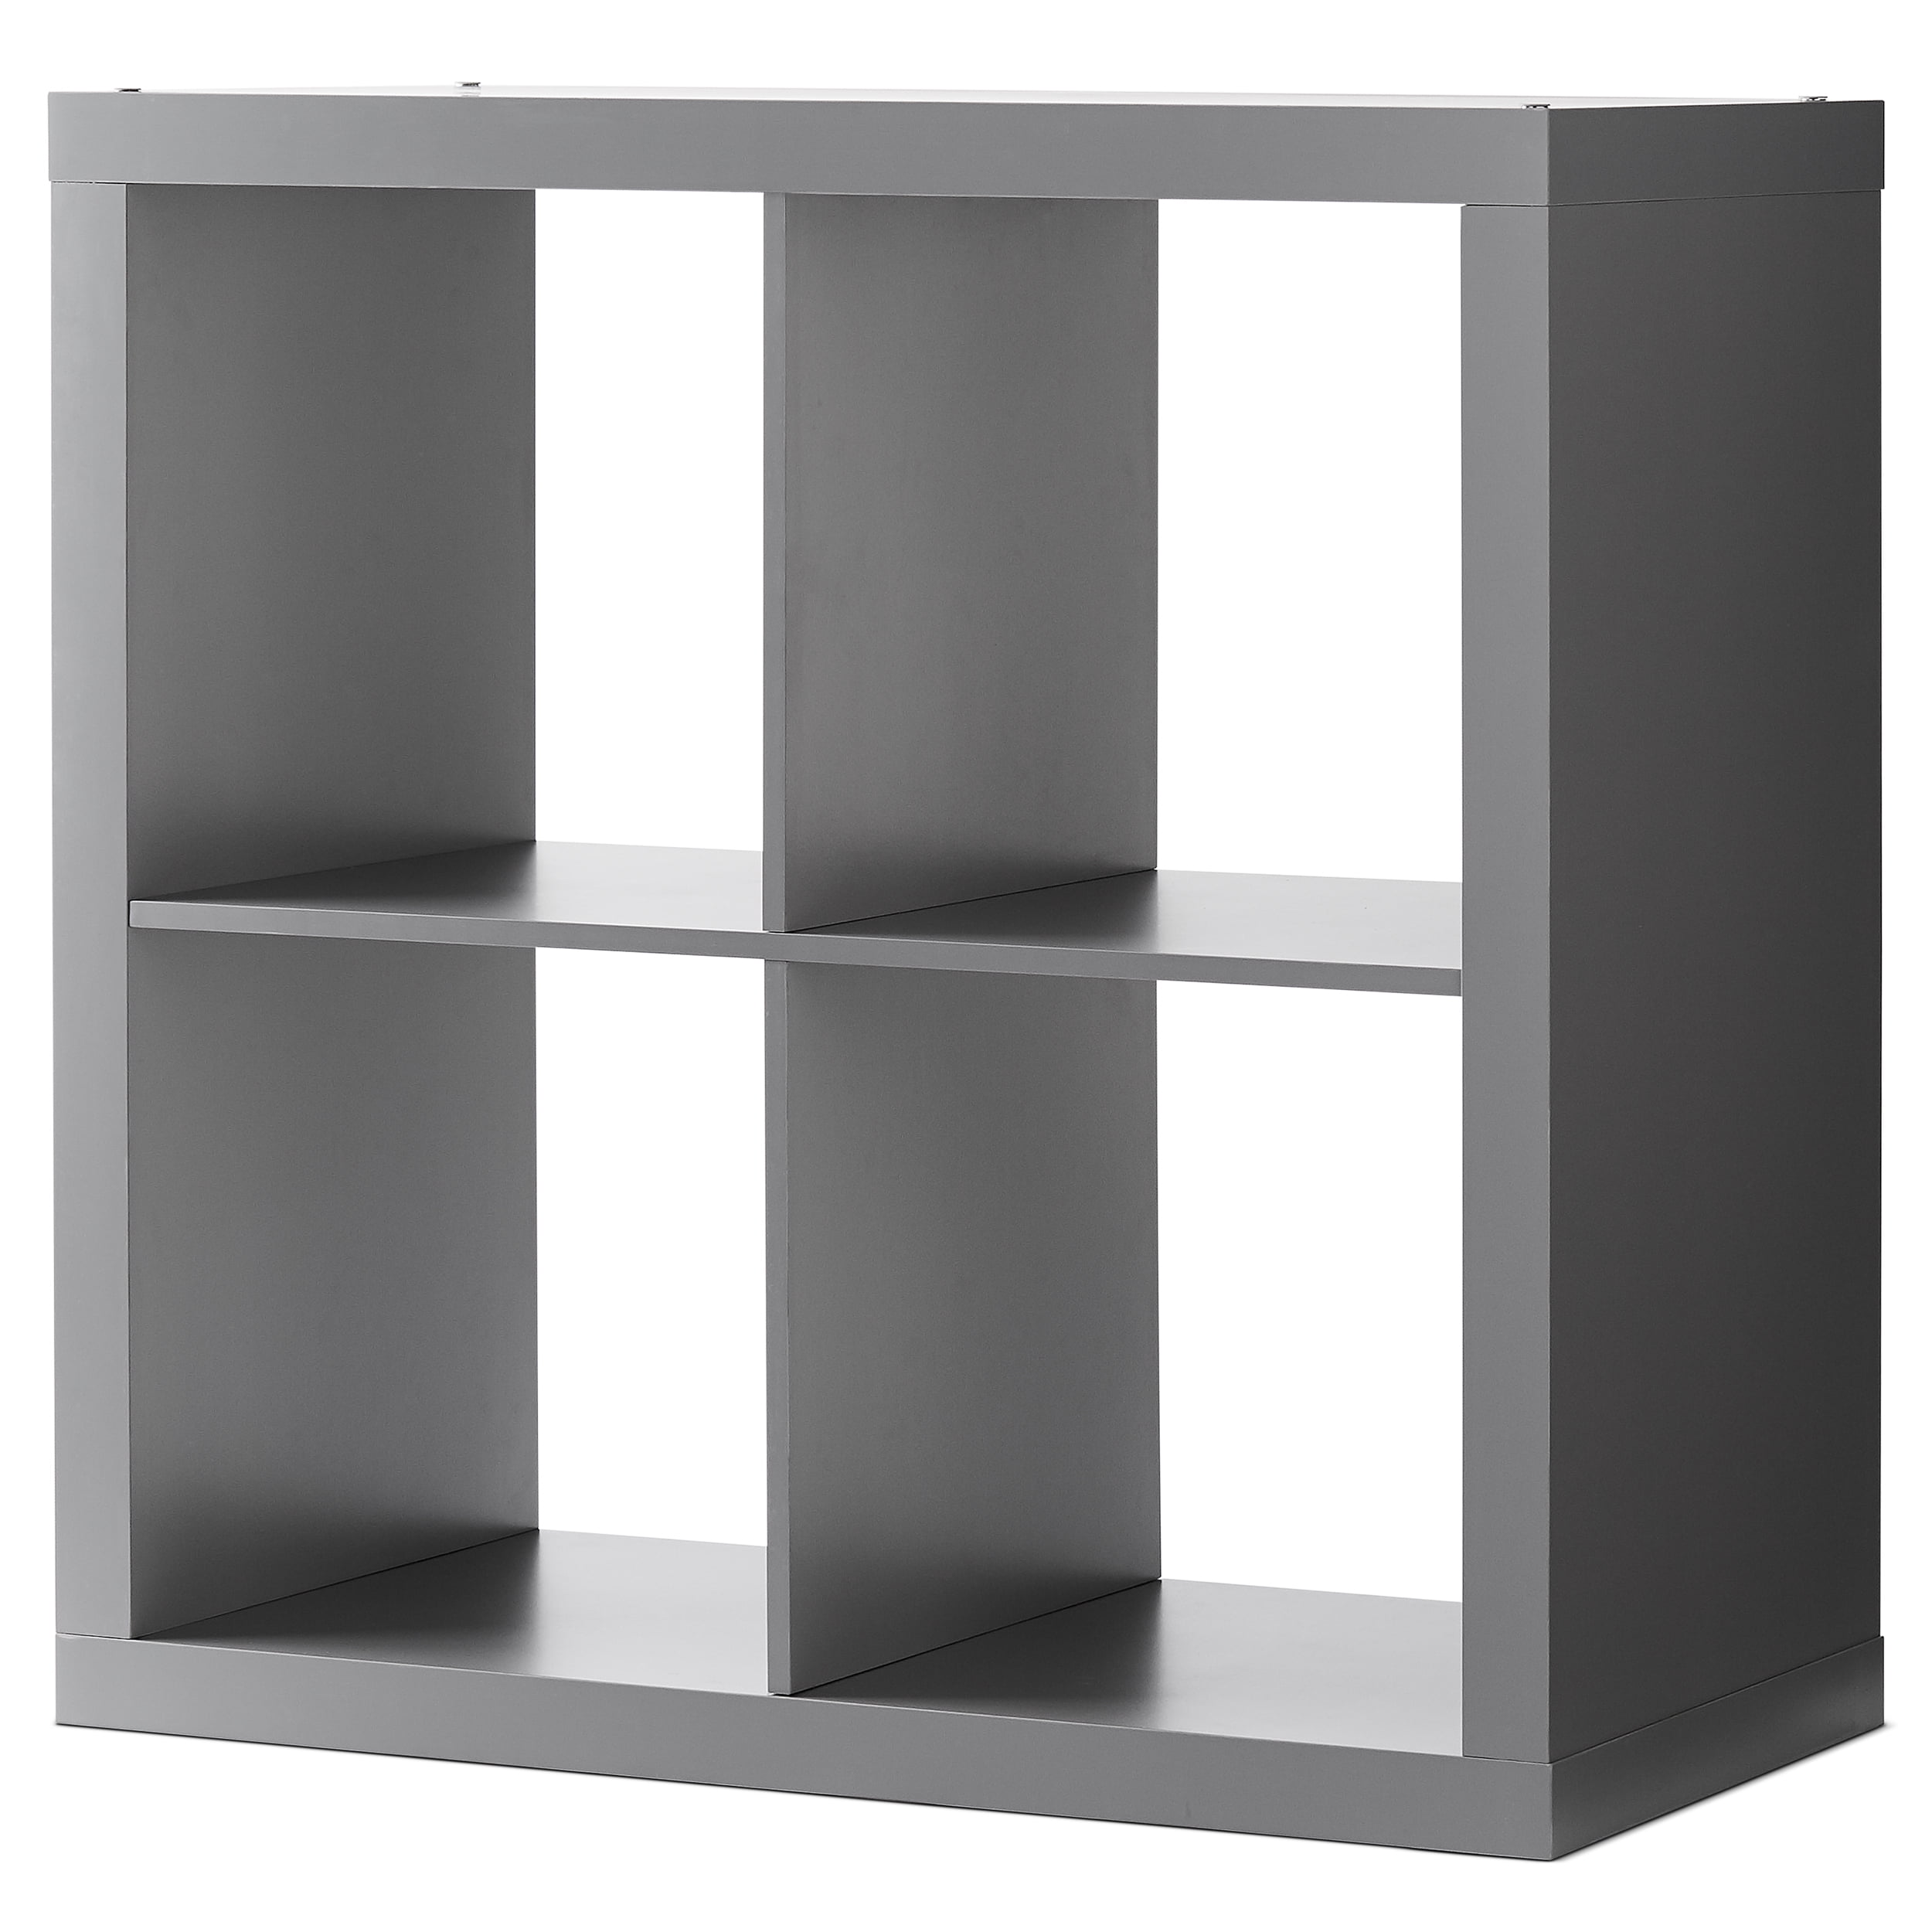 Details about   16 Cube Storage Organizer Plastic Organizer Units 49.5" X 13" X 50.5" White 